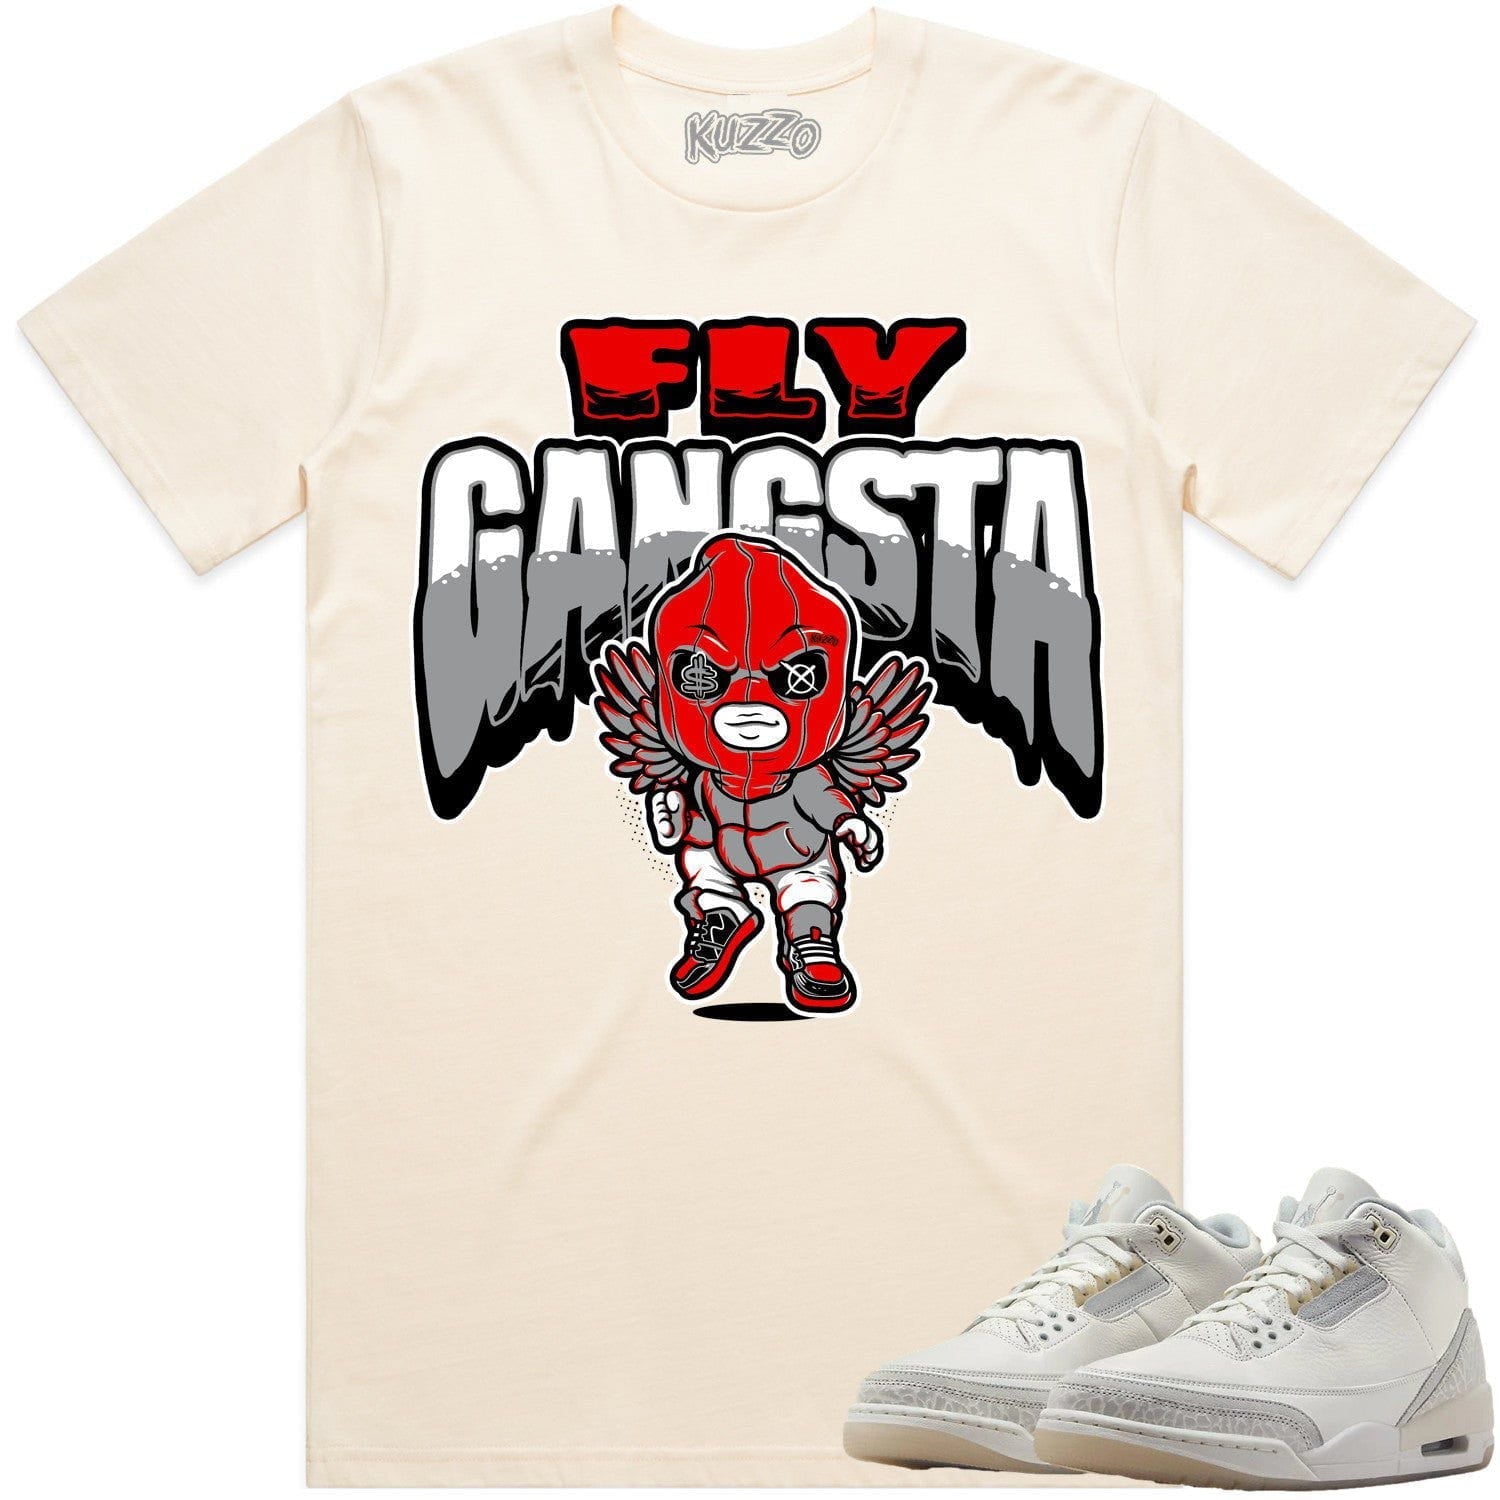 Ivory 3s Shirt - Jordan Retro 3 Craft Ivory Sneaker Tees - Fly Gangsta